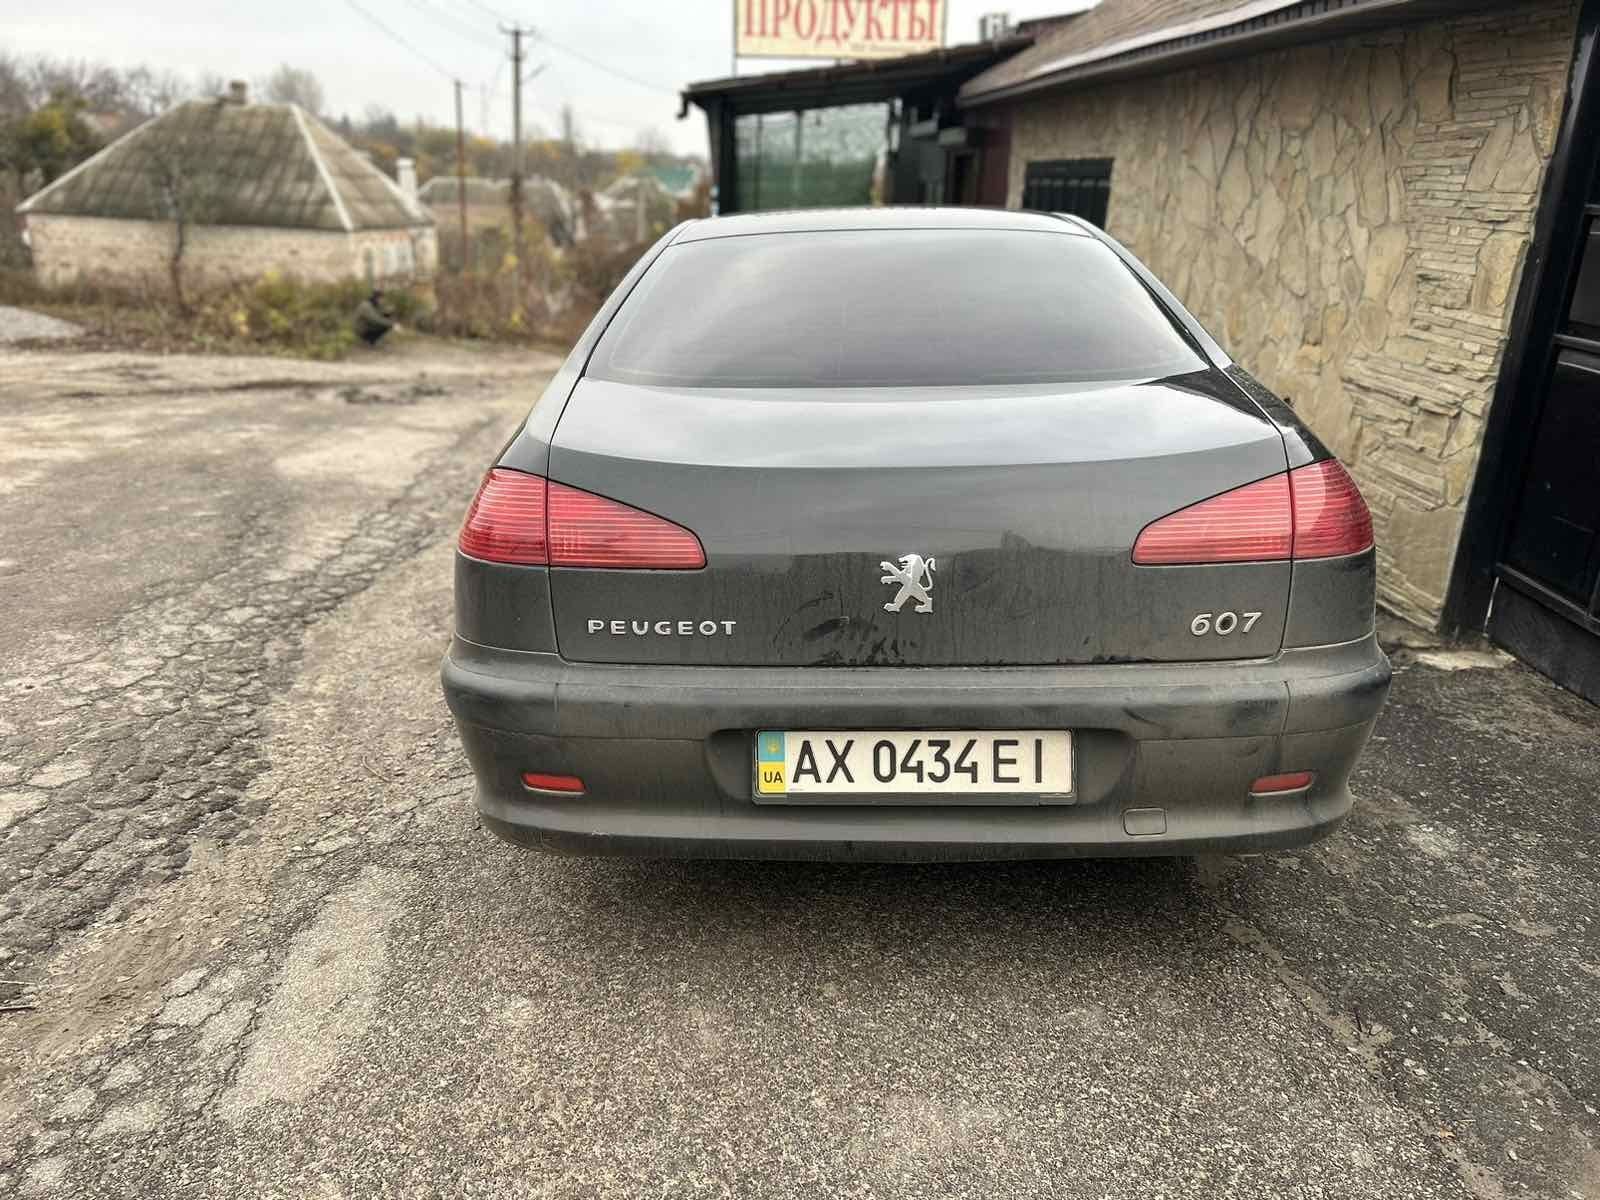 Продам Peugeot 607.2003года